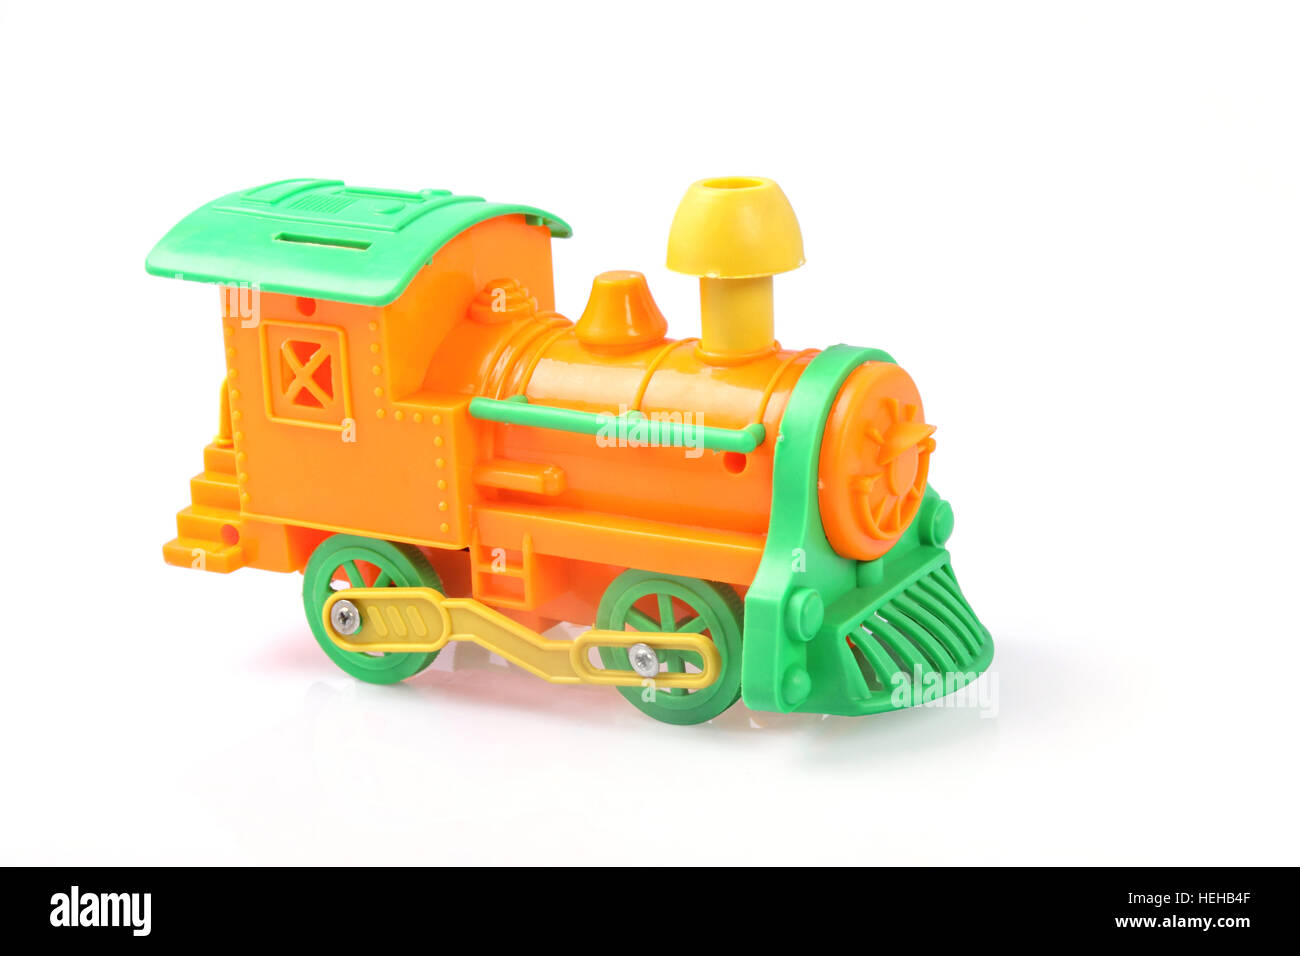 Toy Train Isolated on White Stock Photo